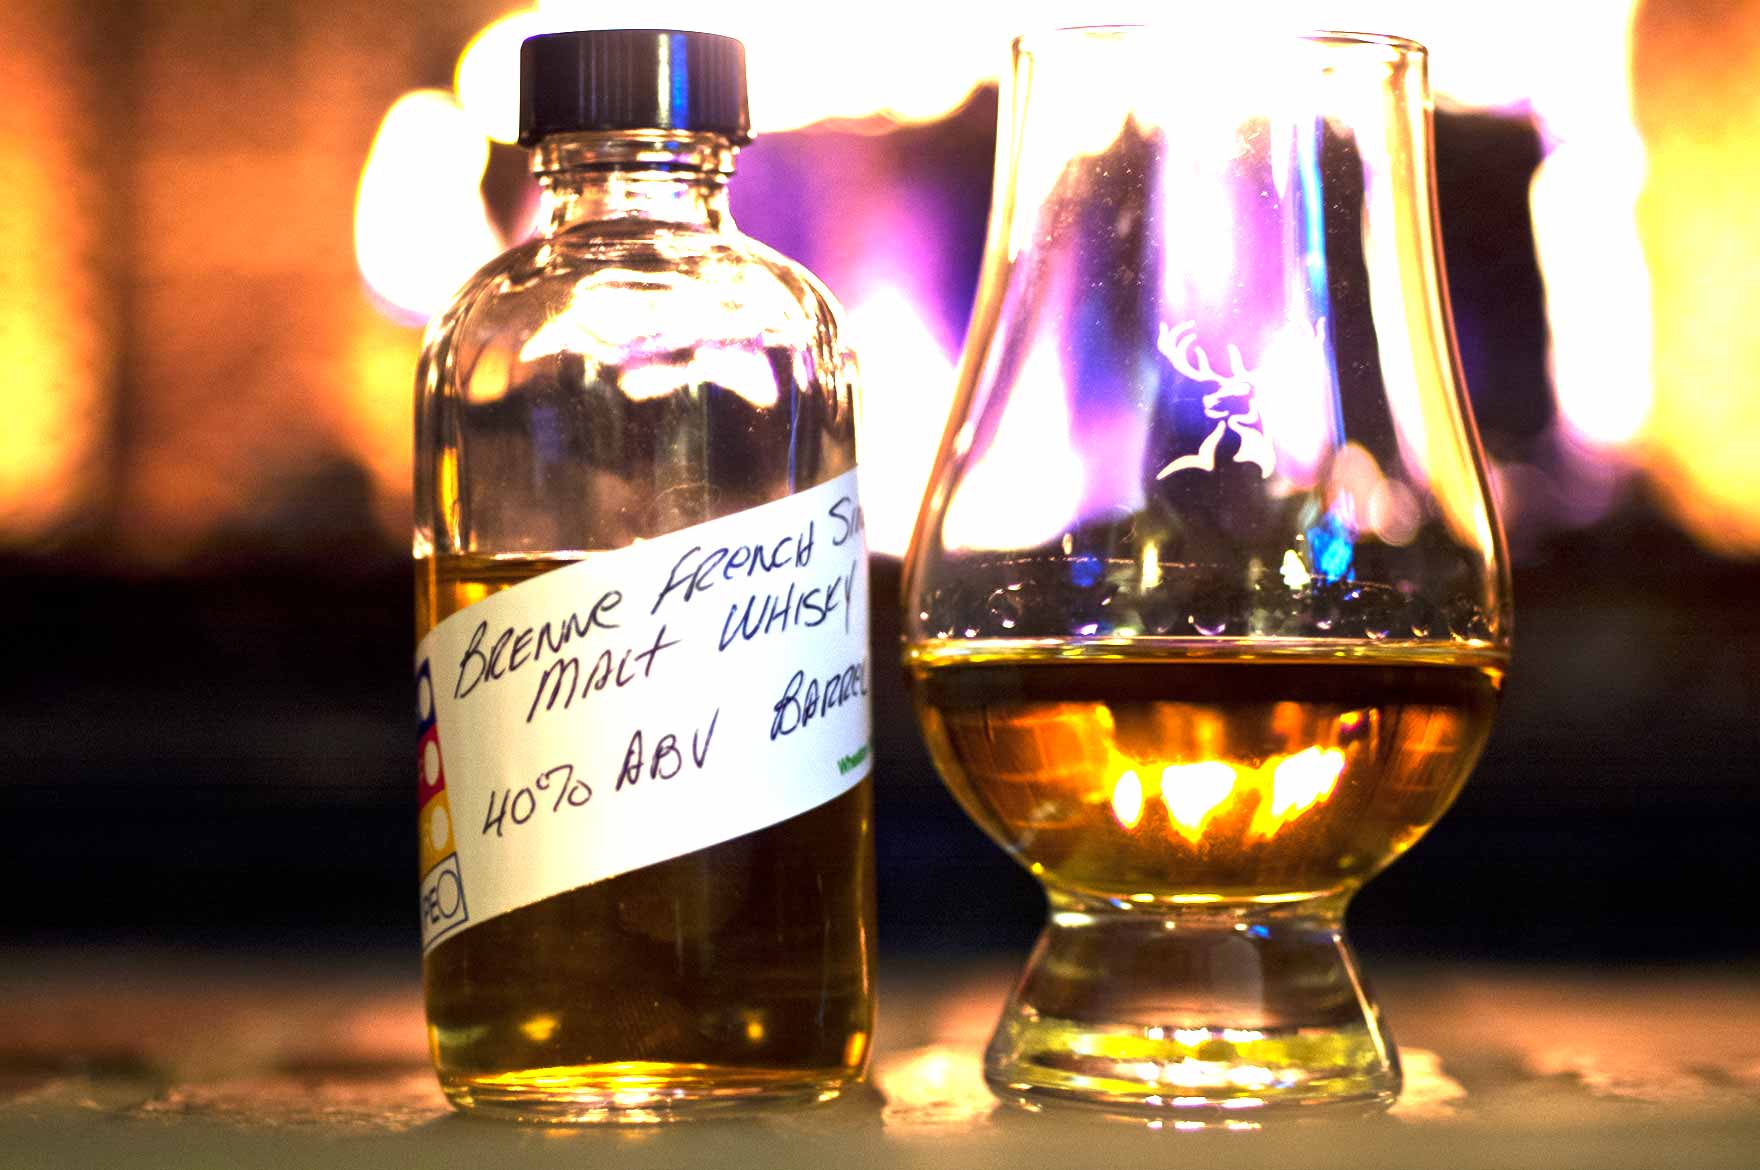 Review of Brenne Whisky in a Glenfiddich Glencairn Glass